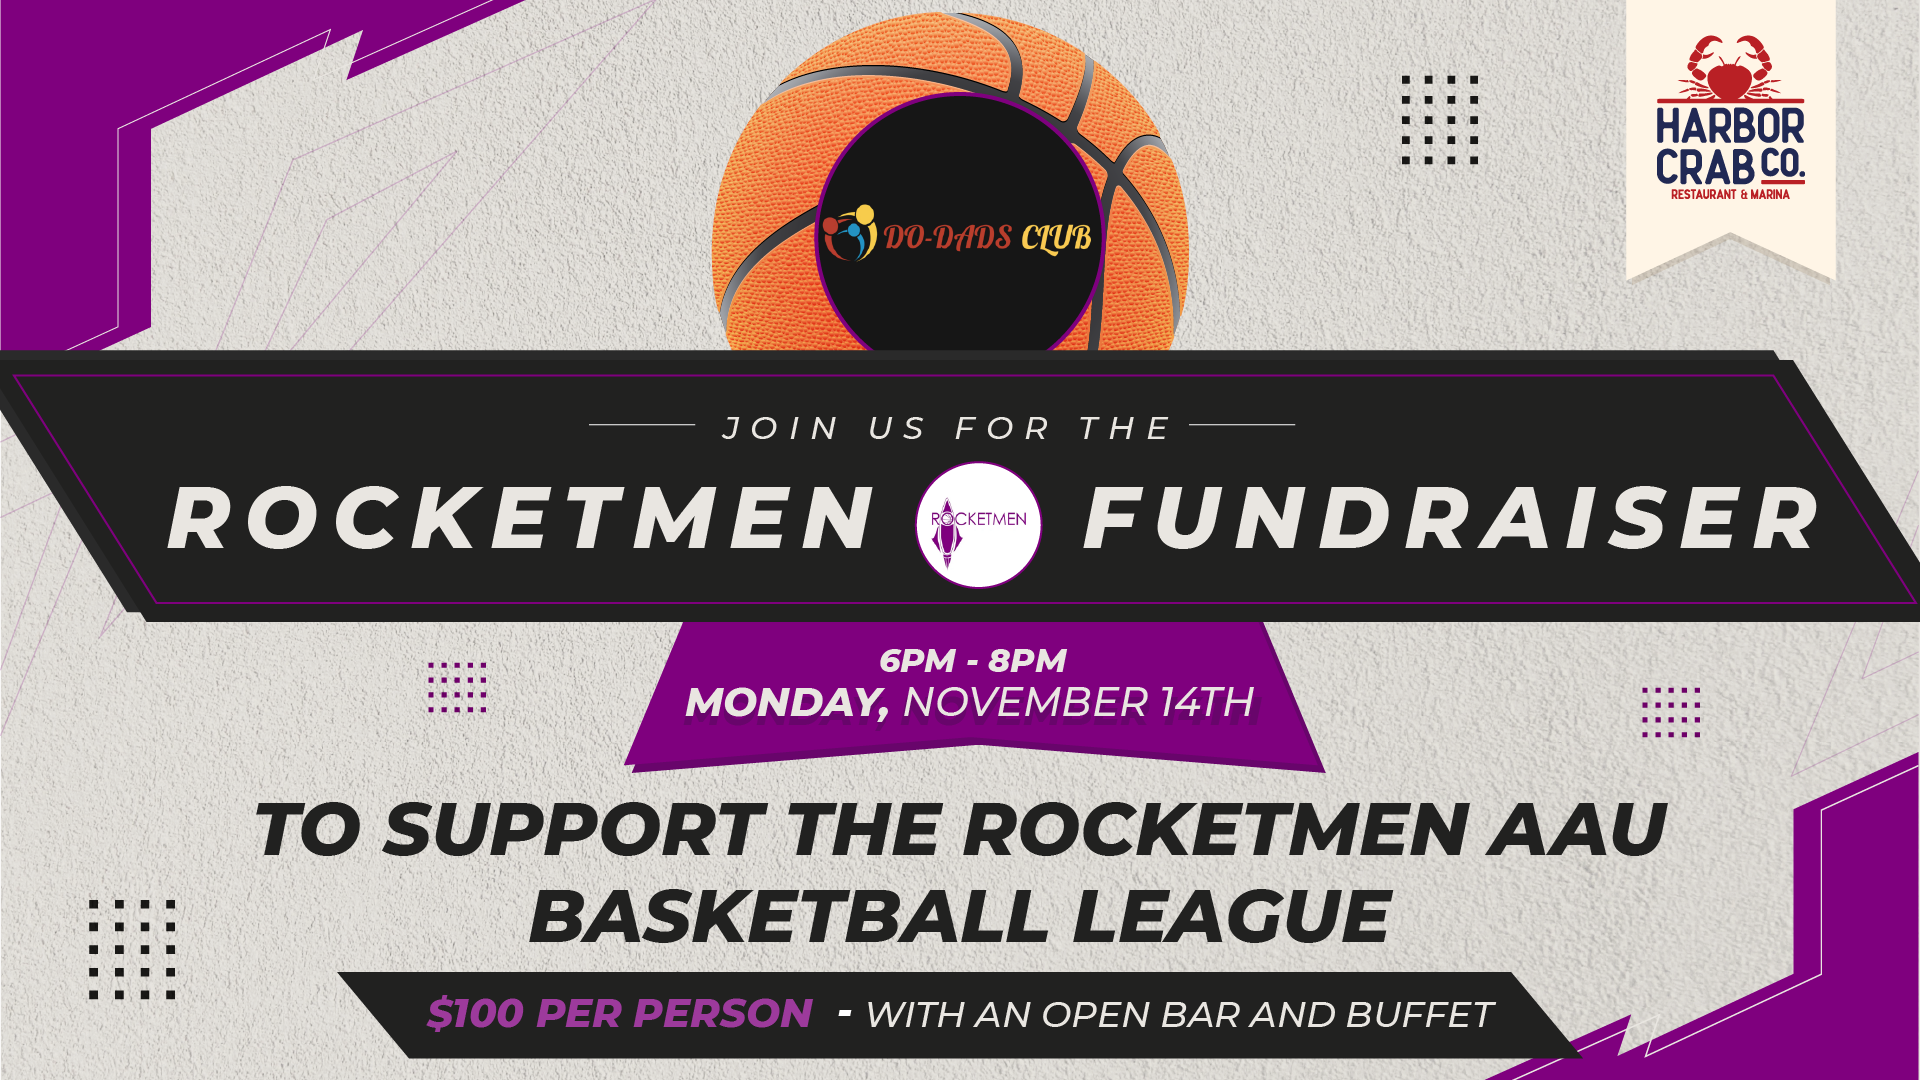 Rocketmen Fundraiser Flyer for Monday, November 14th at Harbor Crab